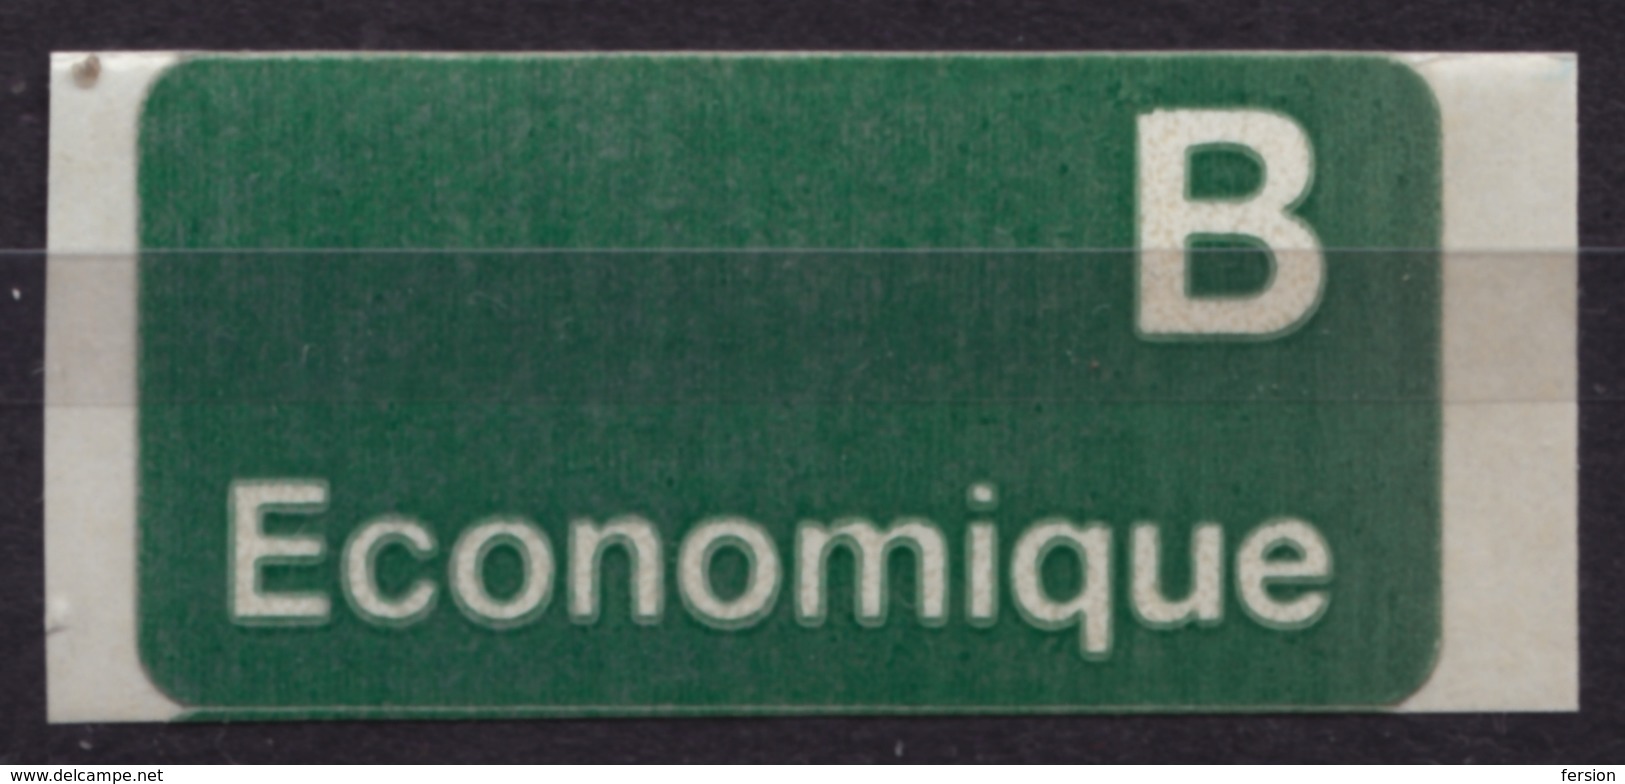 B Economique Vignette Label SEWDEN SVERIGE Self Adhesive Not Used - Vignette [ATM]